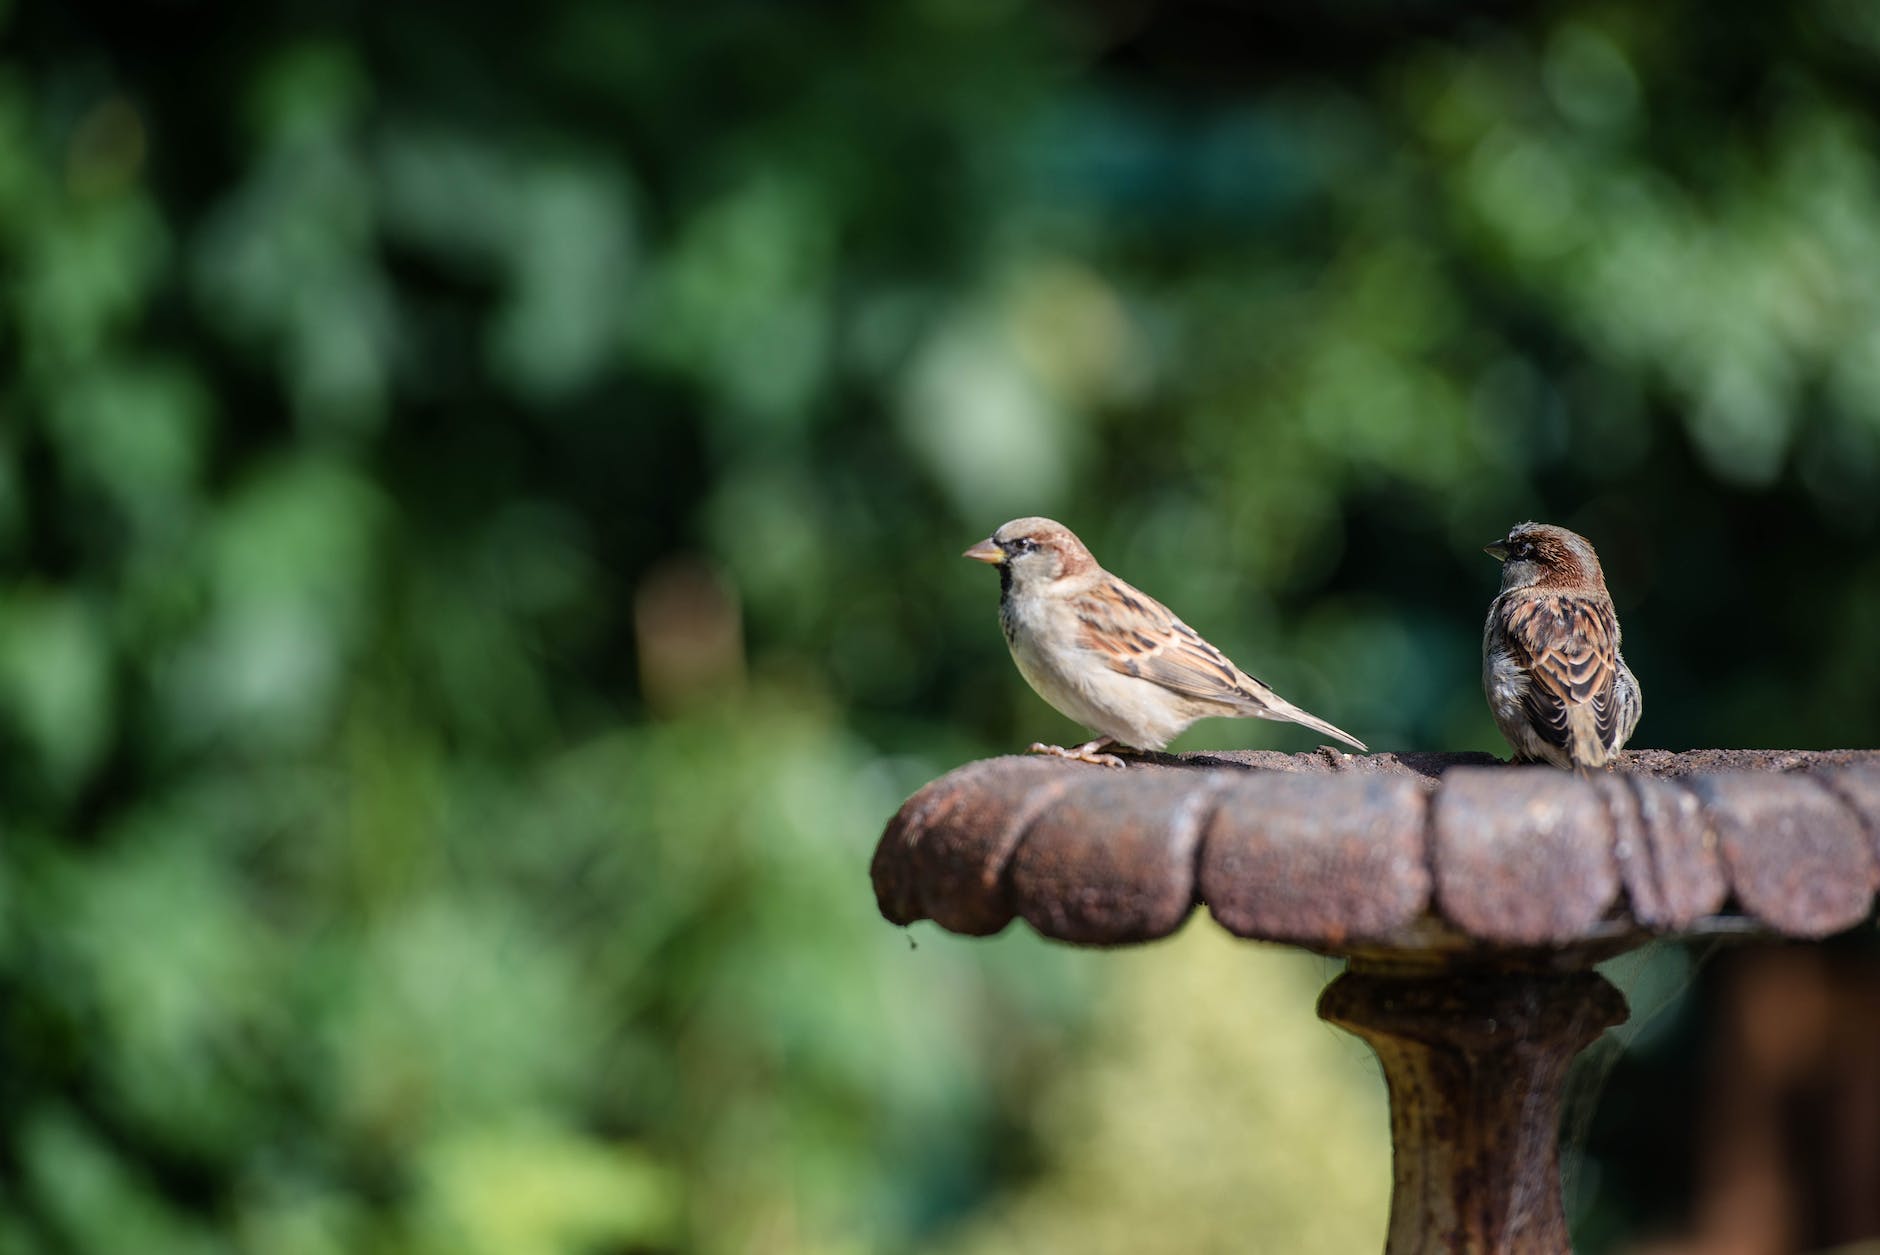 di Indonesia dikenal dengan Burung Gereja di Luar dikenal House Sparrow small sparrows on metal construction in nature